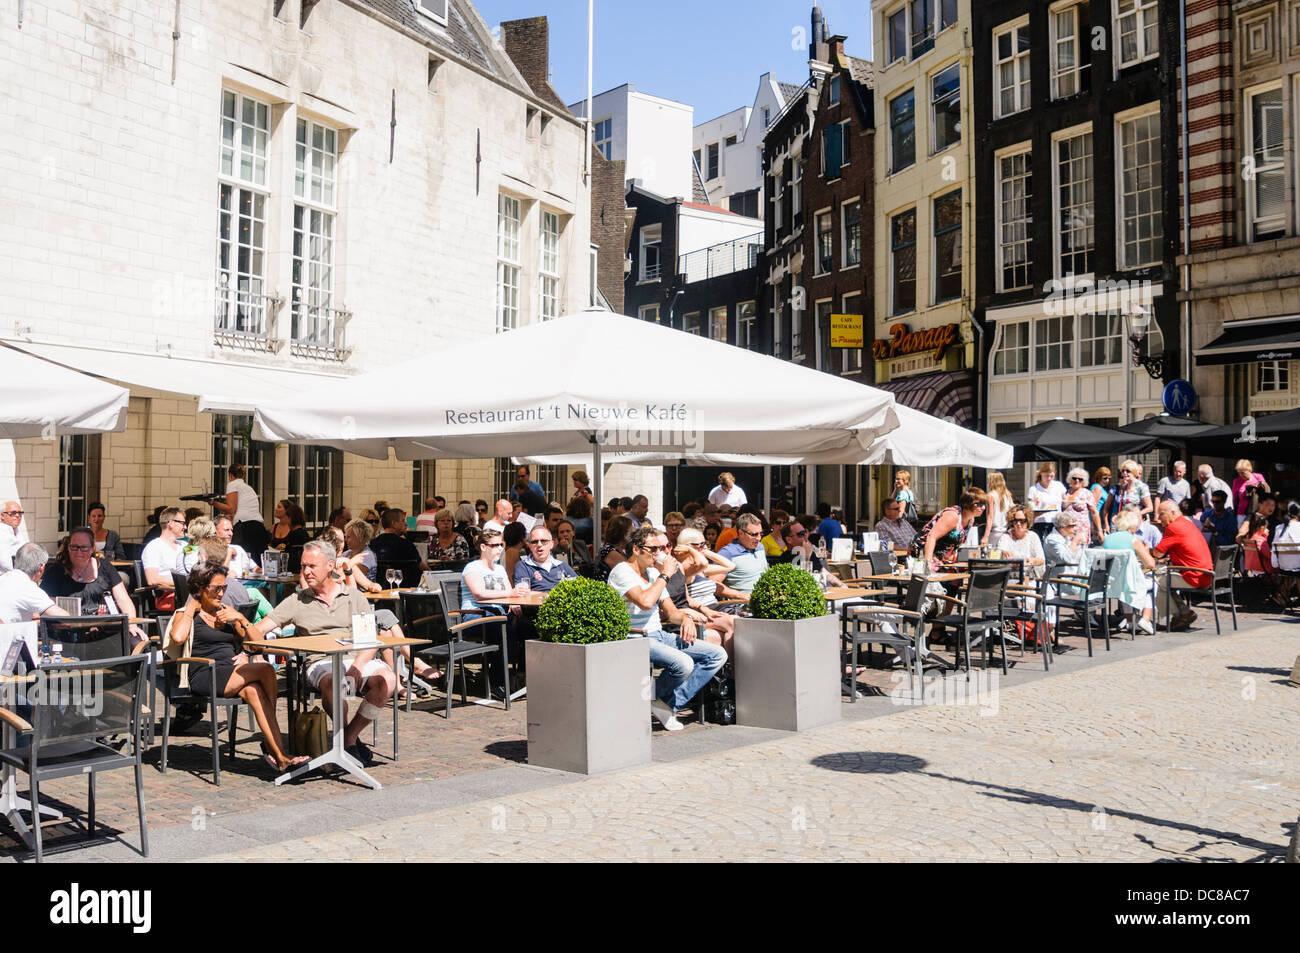 Le persone sedute a tavoli fuori un cafe al Neuwekerk in Piazza Dam, Amsterdam Foto Stock